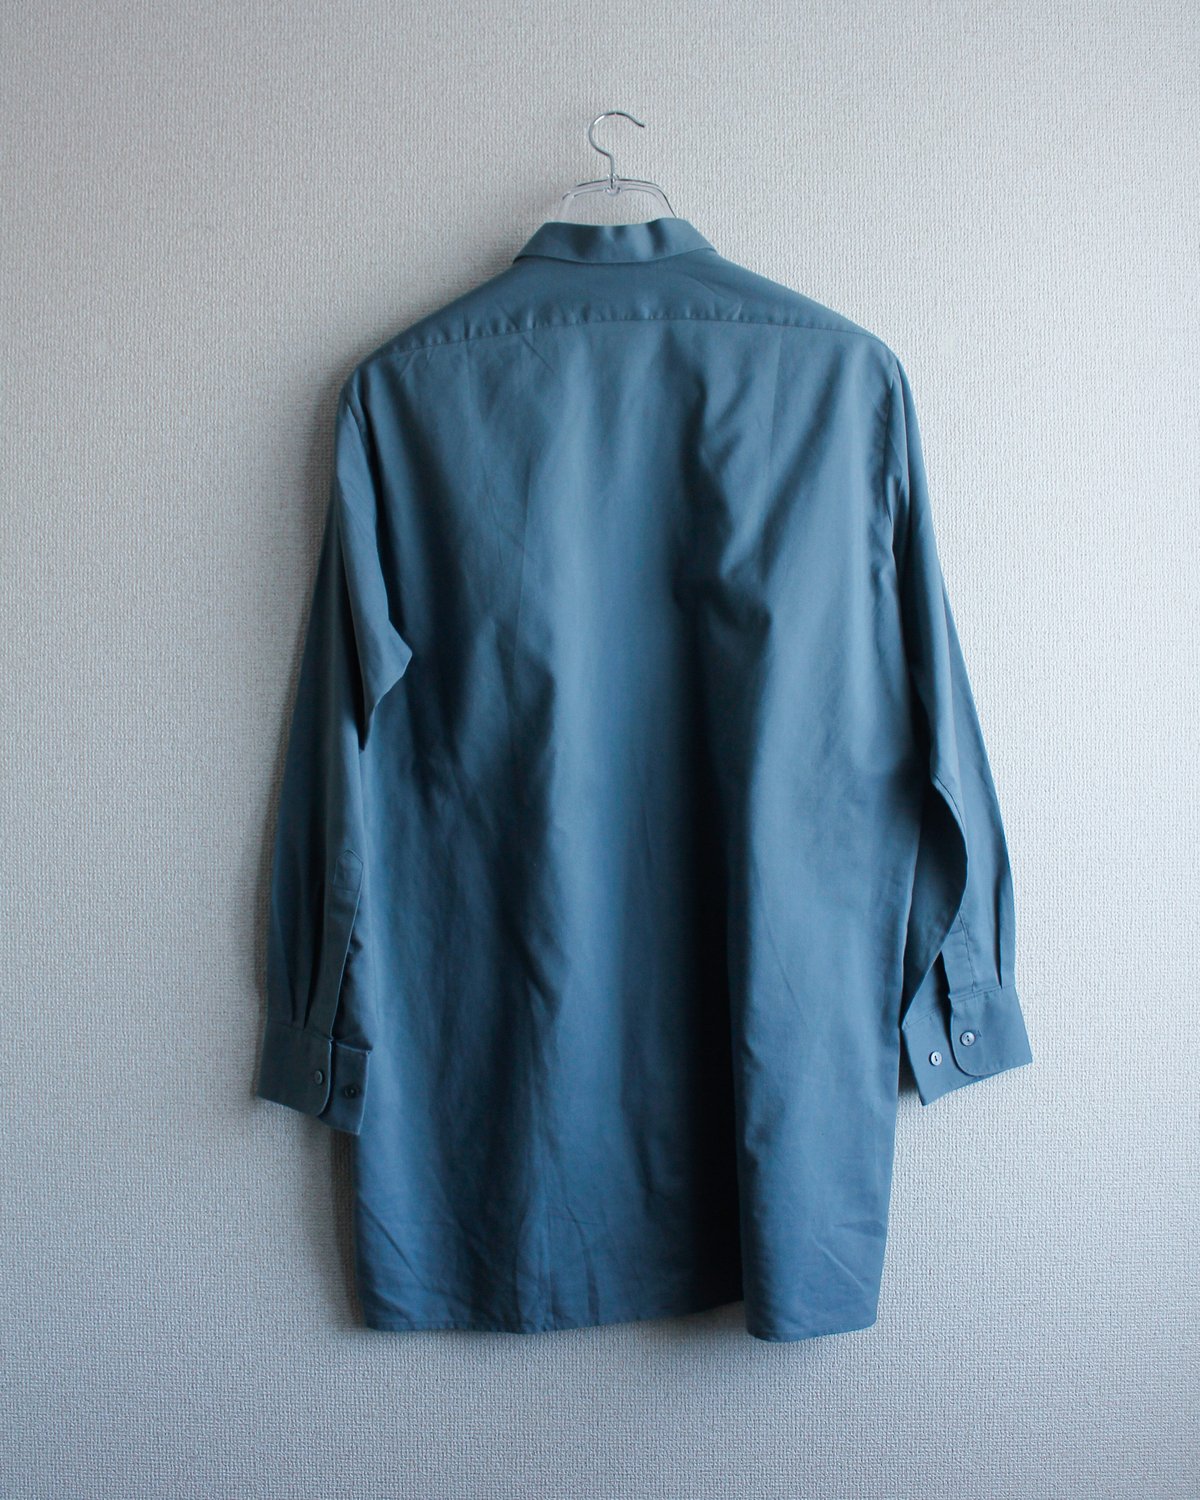 50s’ 60s’ Euro vintage Swiss army grandpa shirt / スイス軍グランパシャツ